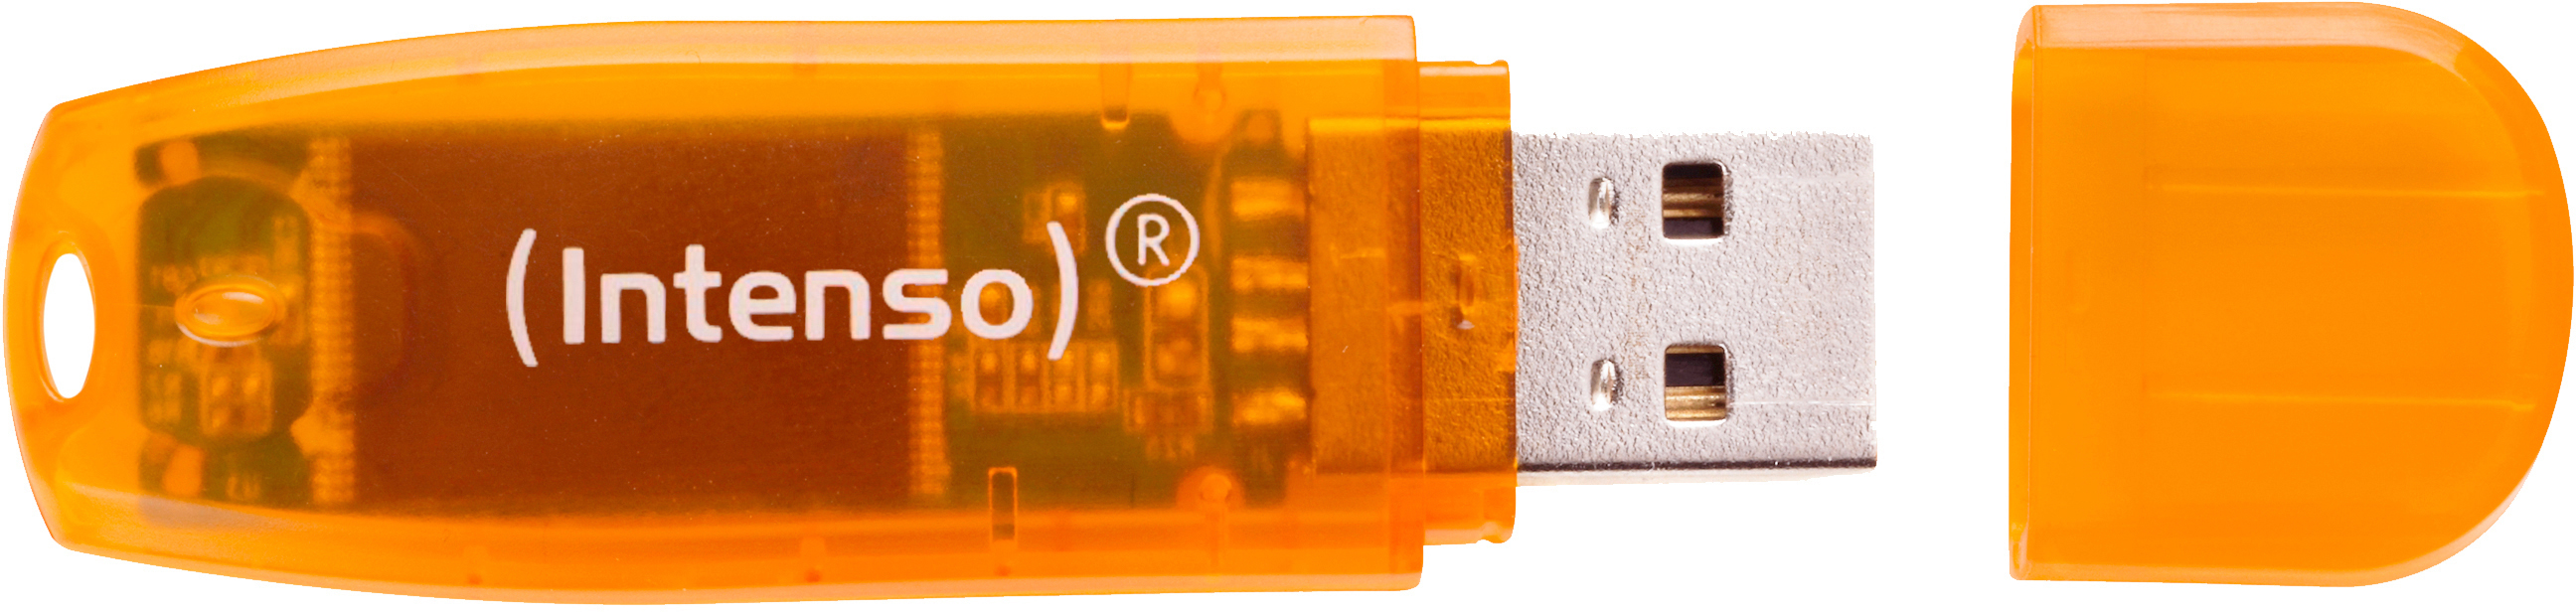 64 28 Orange MB/s, Line GB, USB-Stick, Rainbow INTENSO